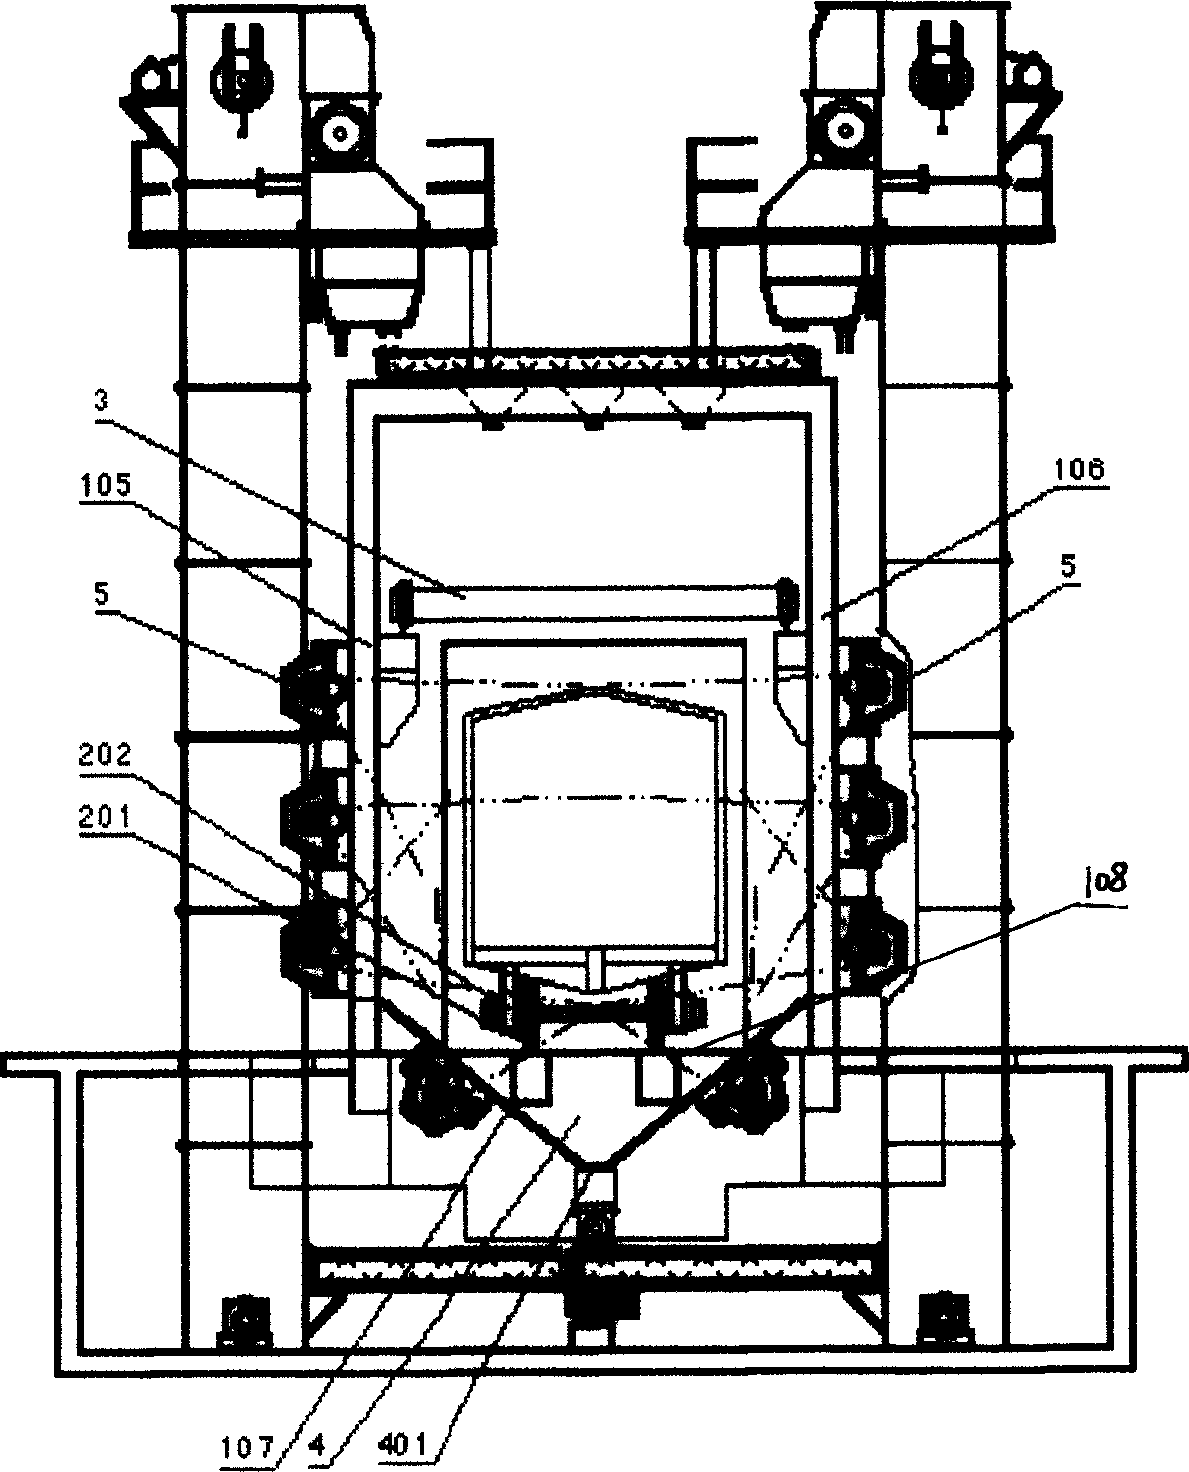 Complete abrator for locomotive